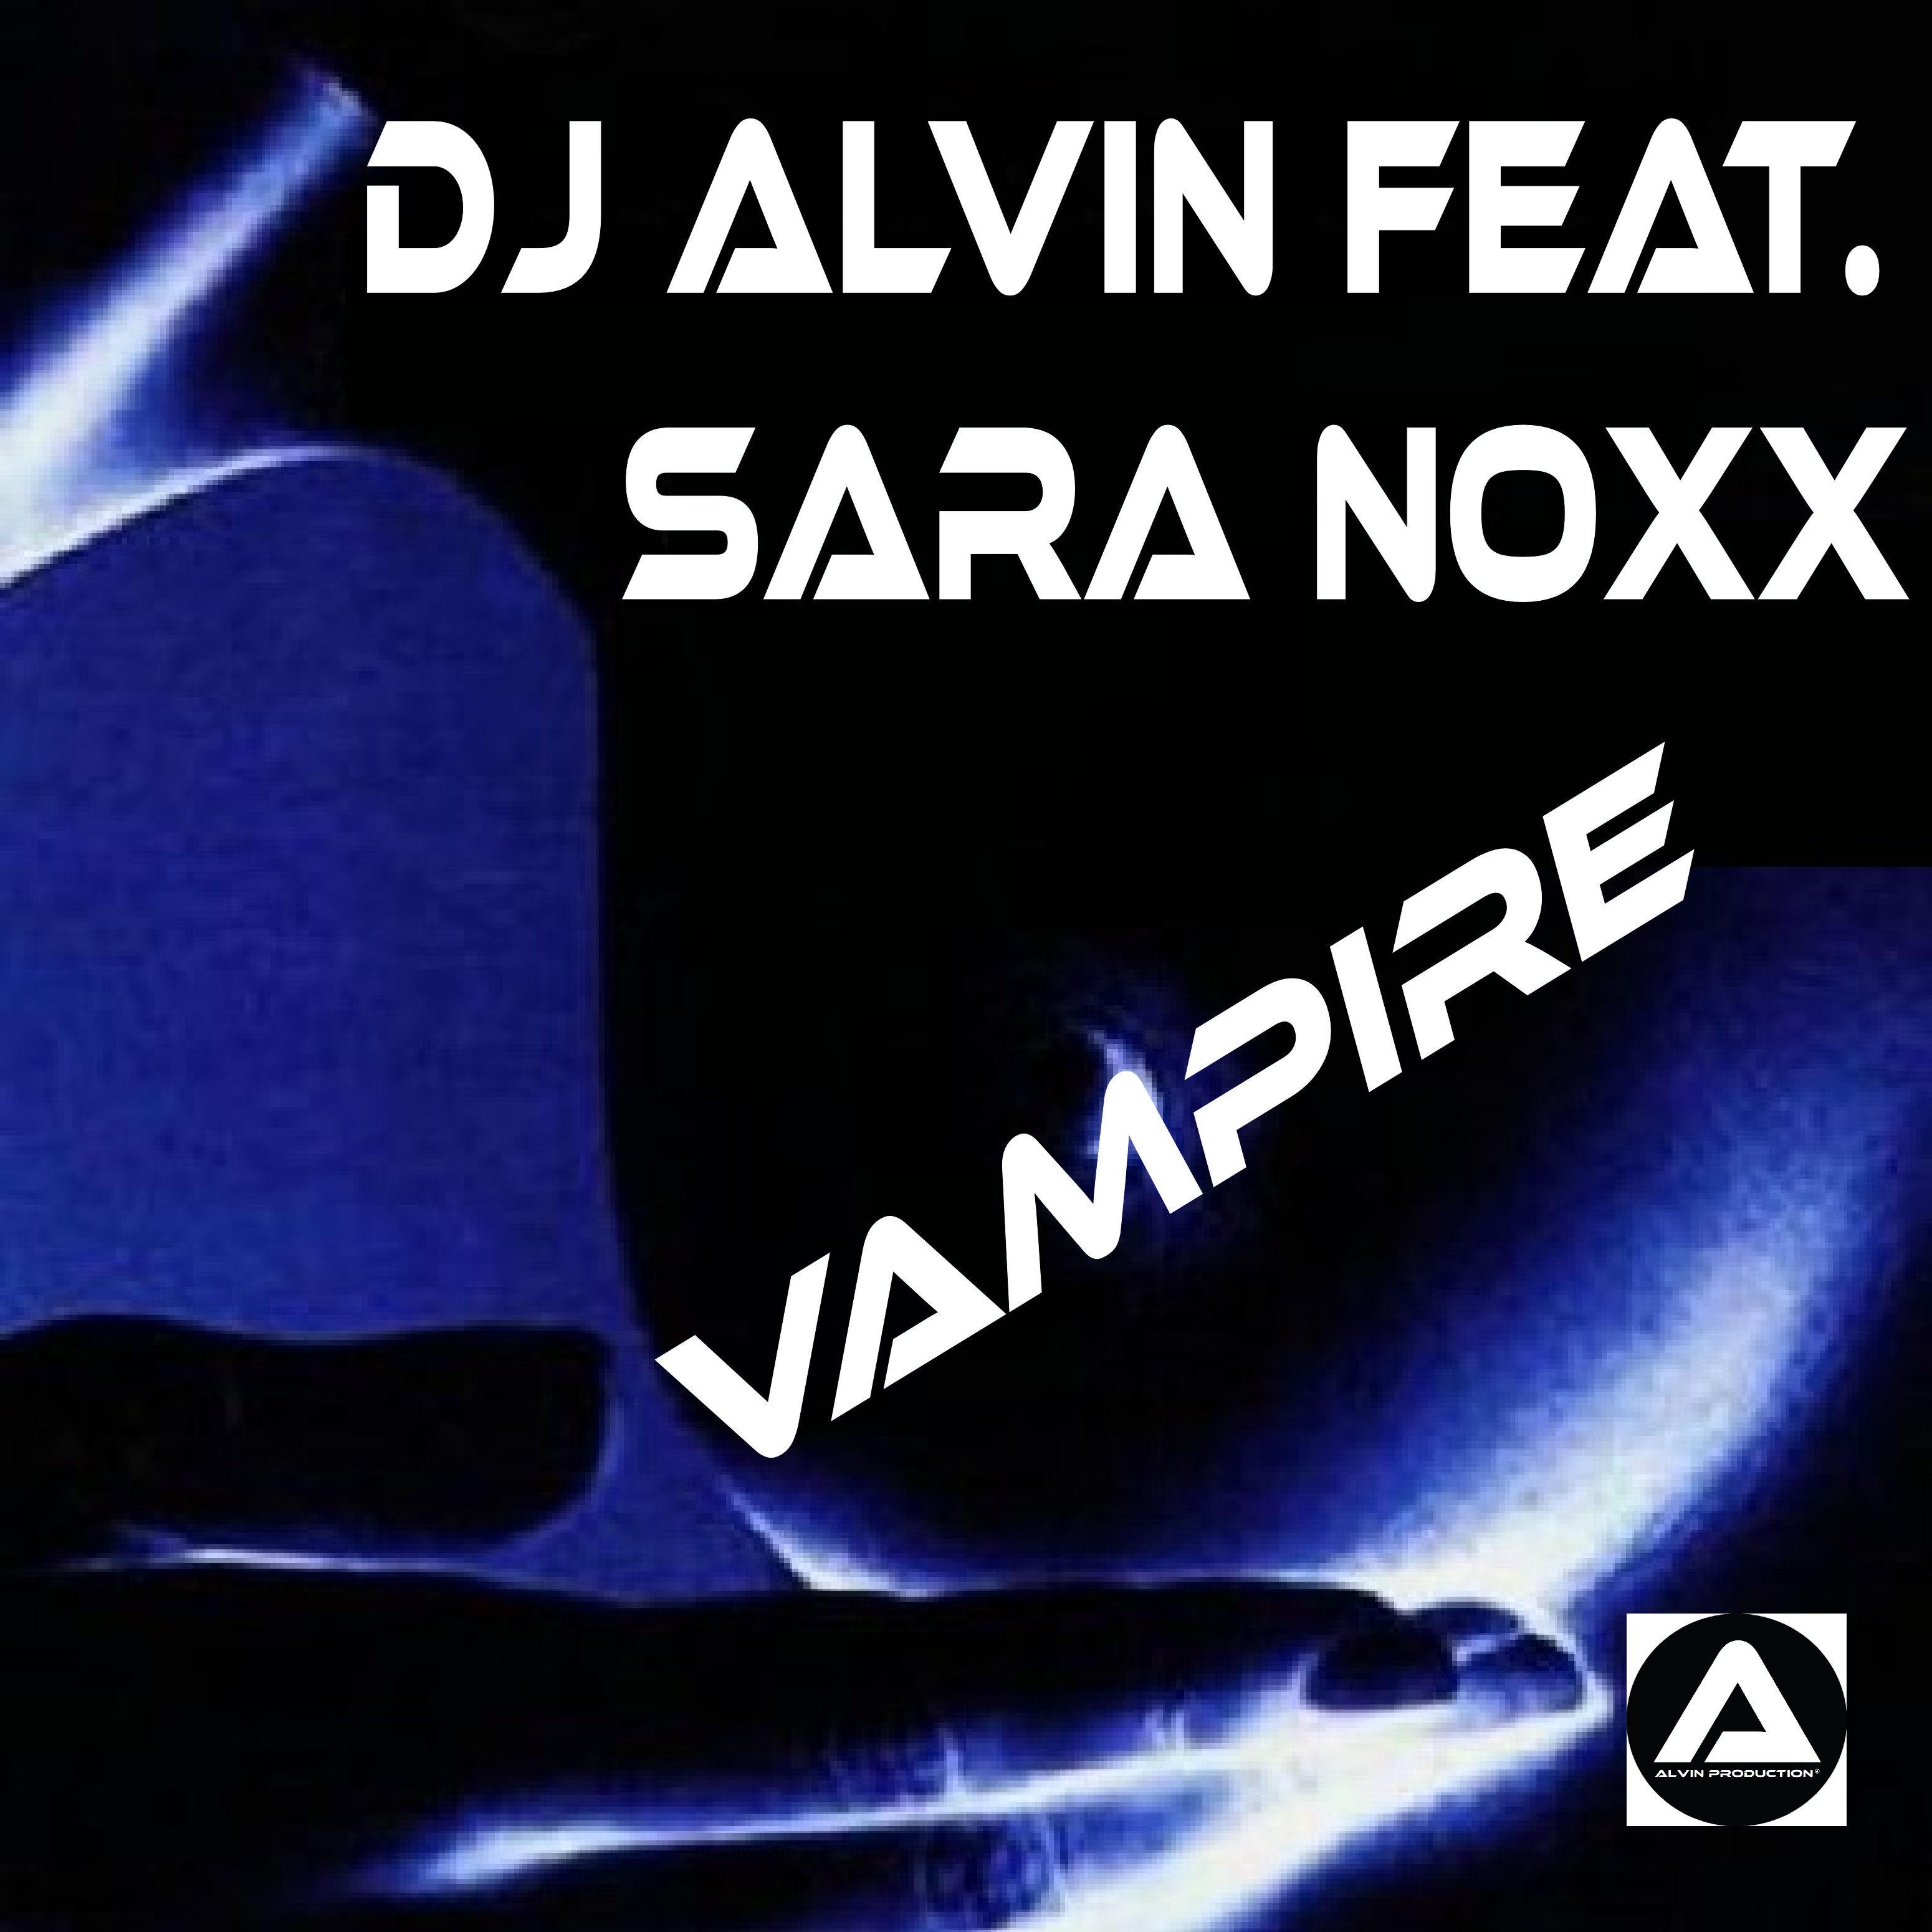 DJ Alvin Feat. Sara Noxx - Vampire